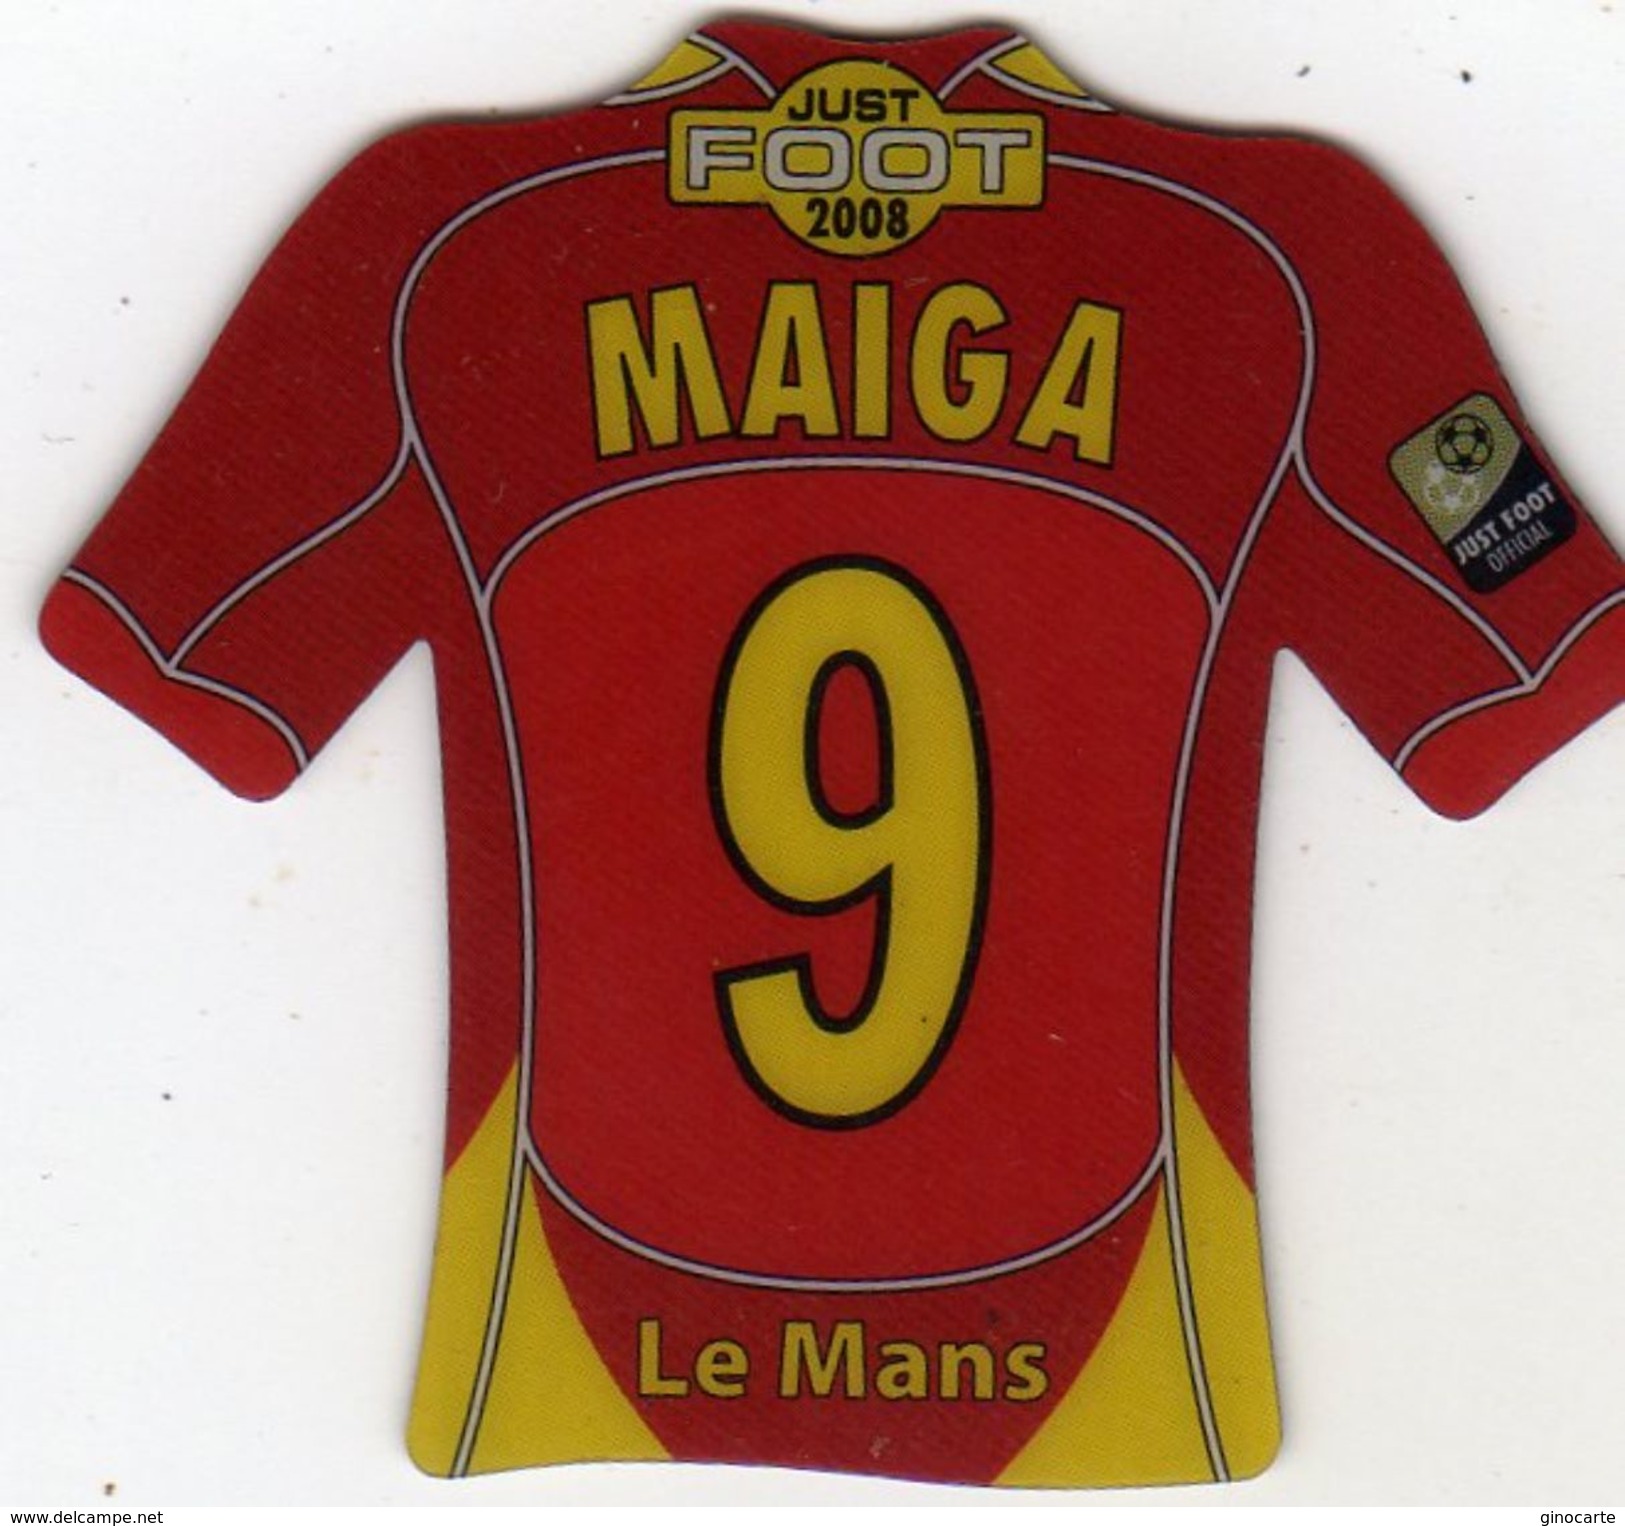 Magnet Magnets Maillot De Football Pitch Le Mans Maiga 2008 - Sport